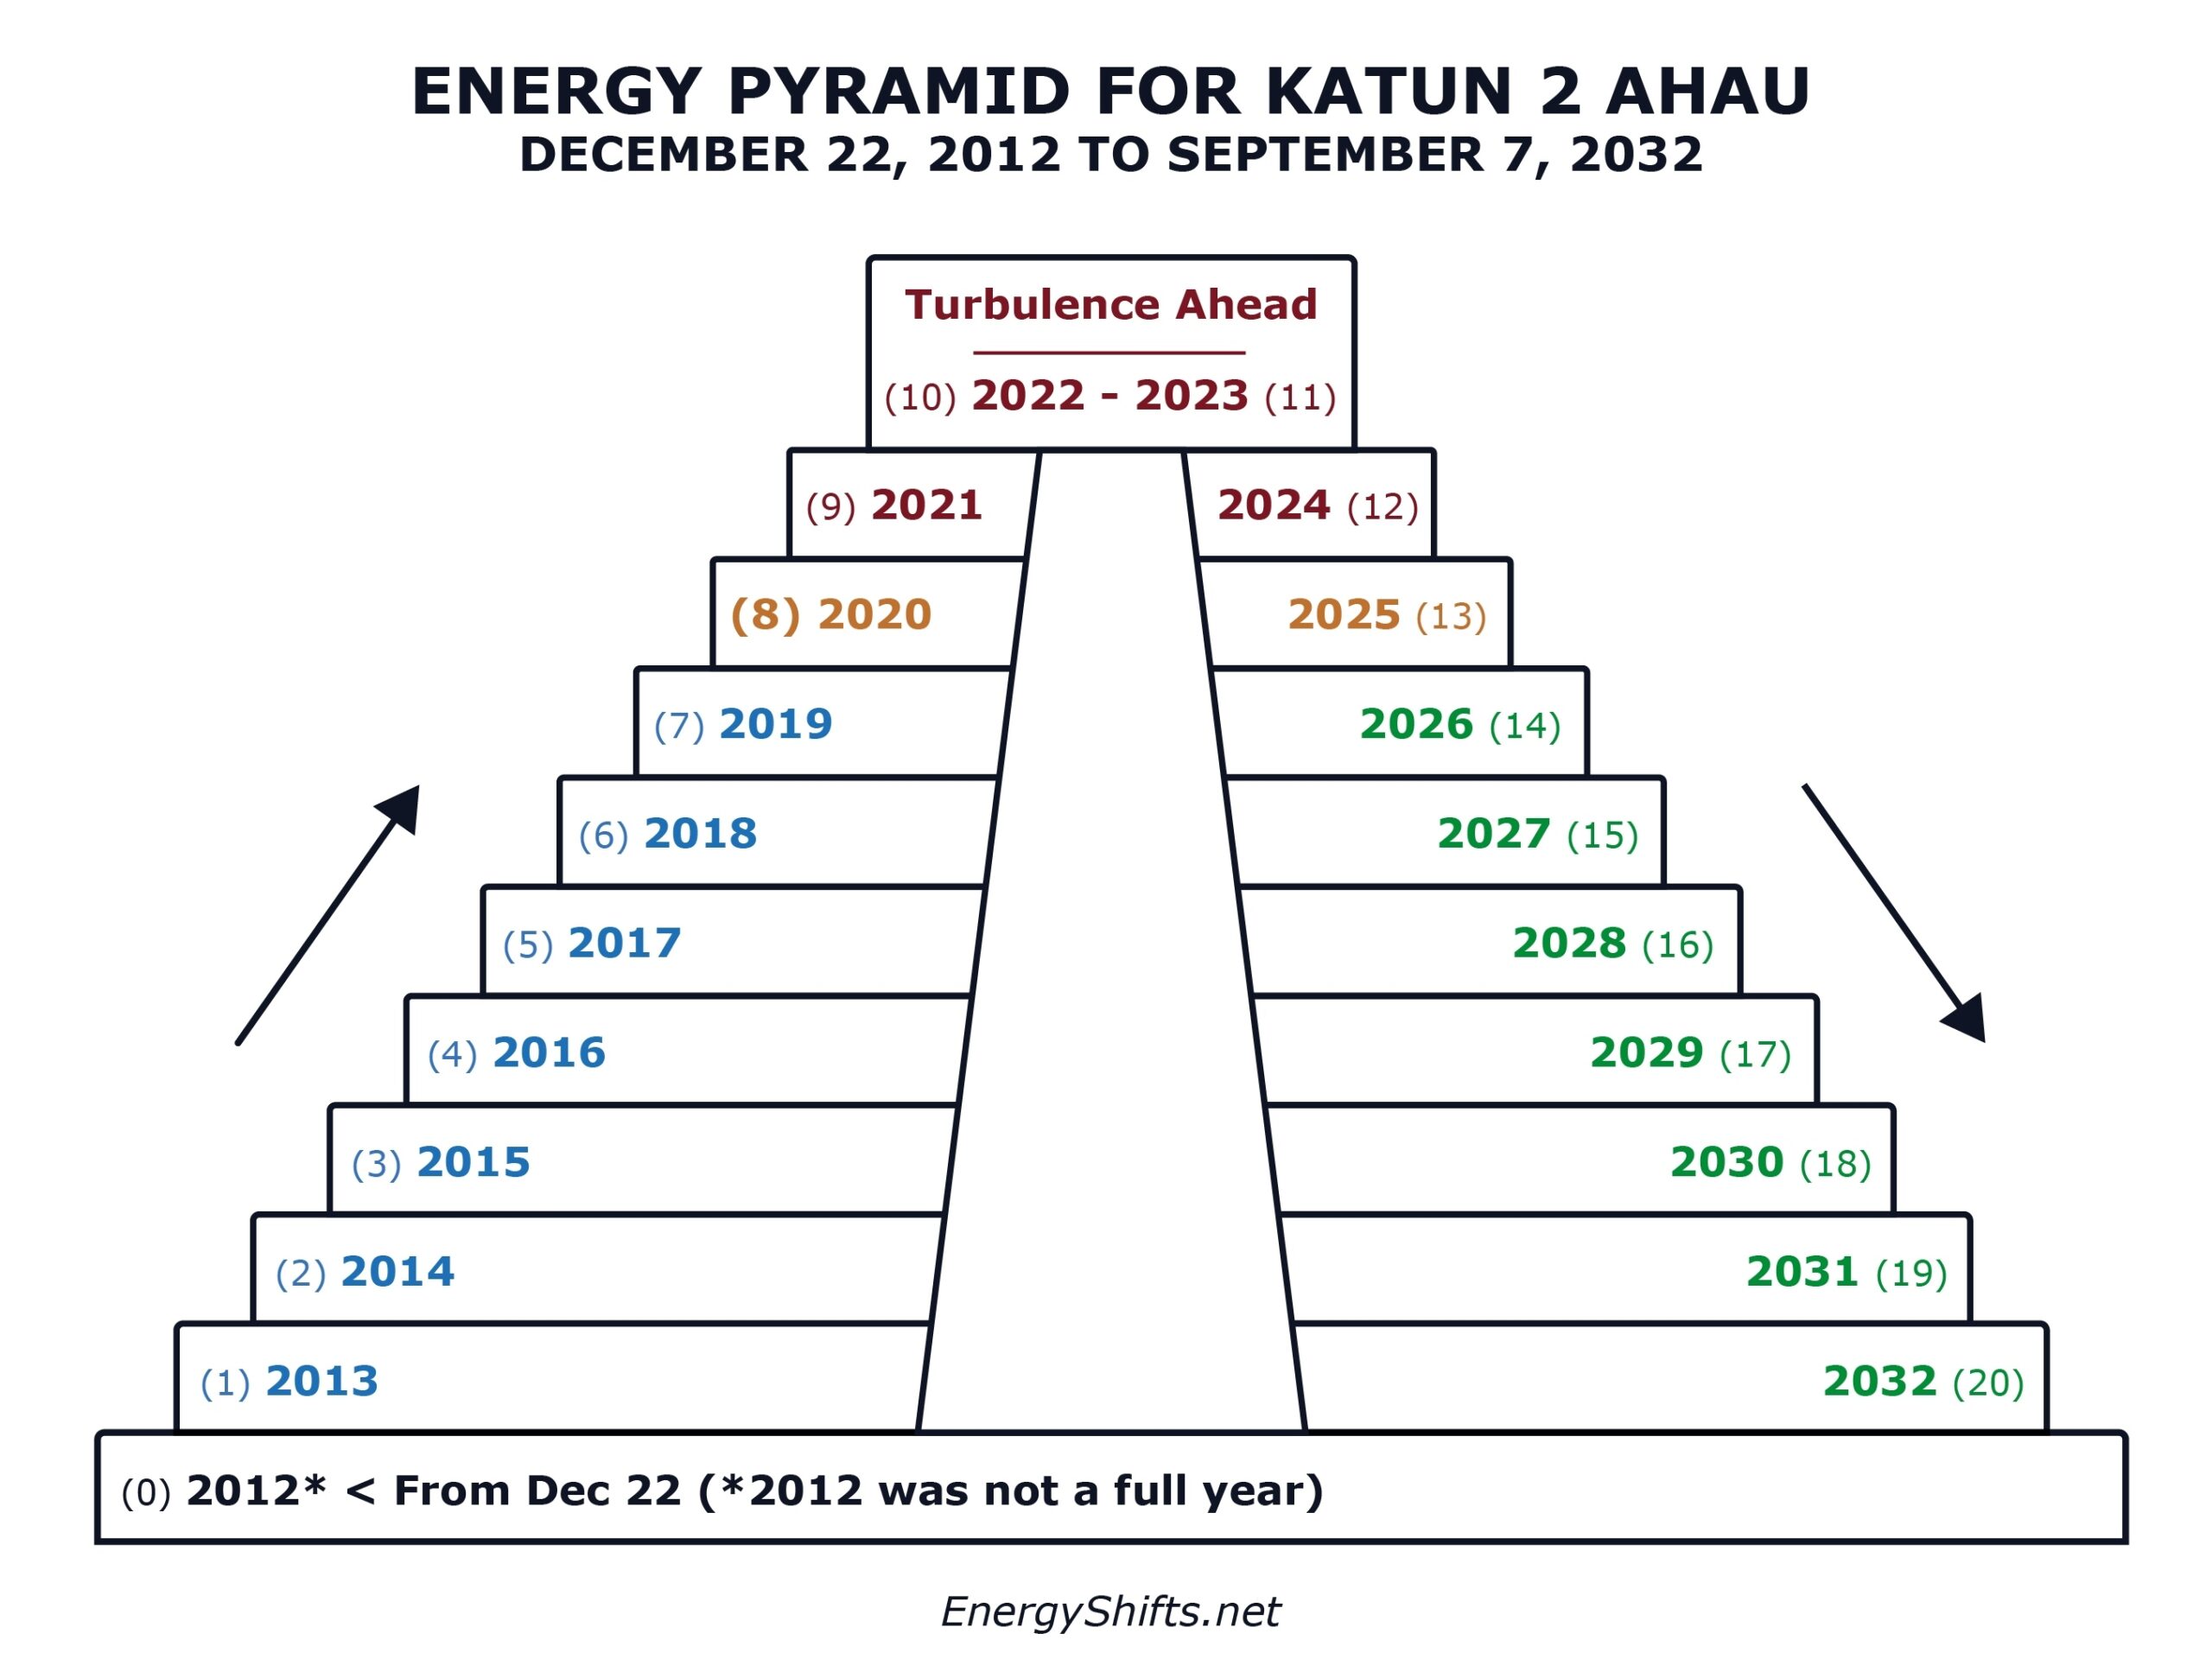 Fig 1 Energy Pyramid For Katun 2 Ahau 2012 To 2032